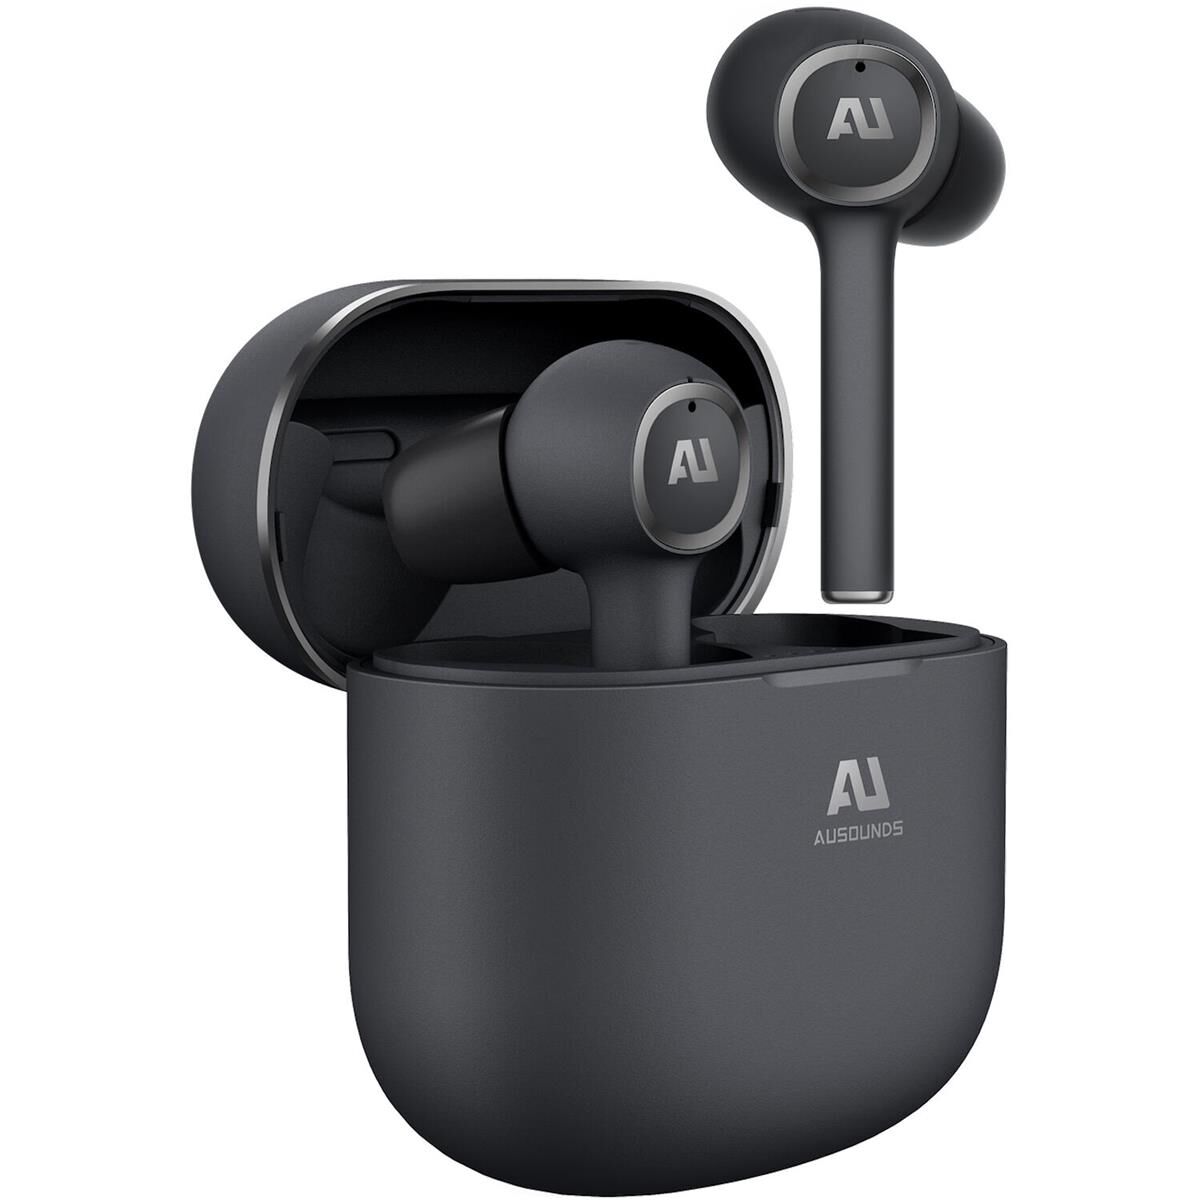 Ausounds AU-Stream ANC True Wireless Noise-Cancelling Earbuds, Black